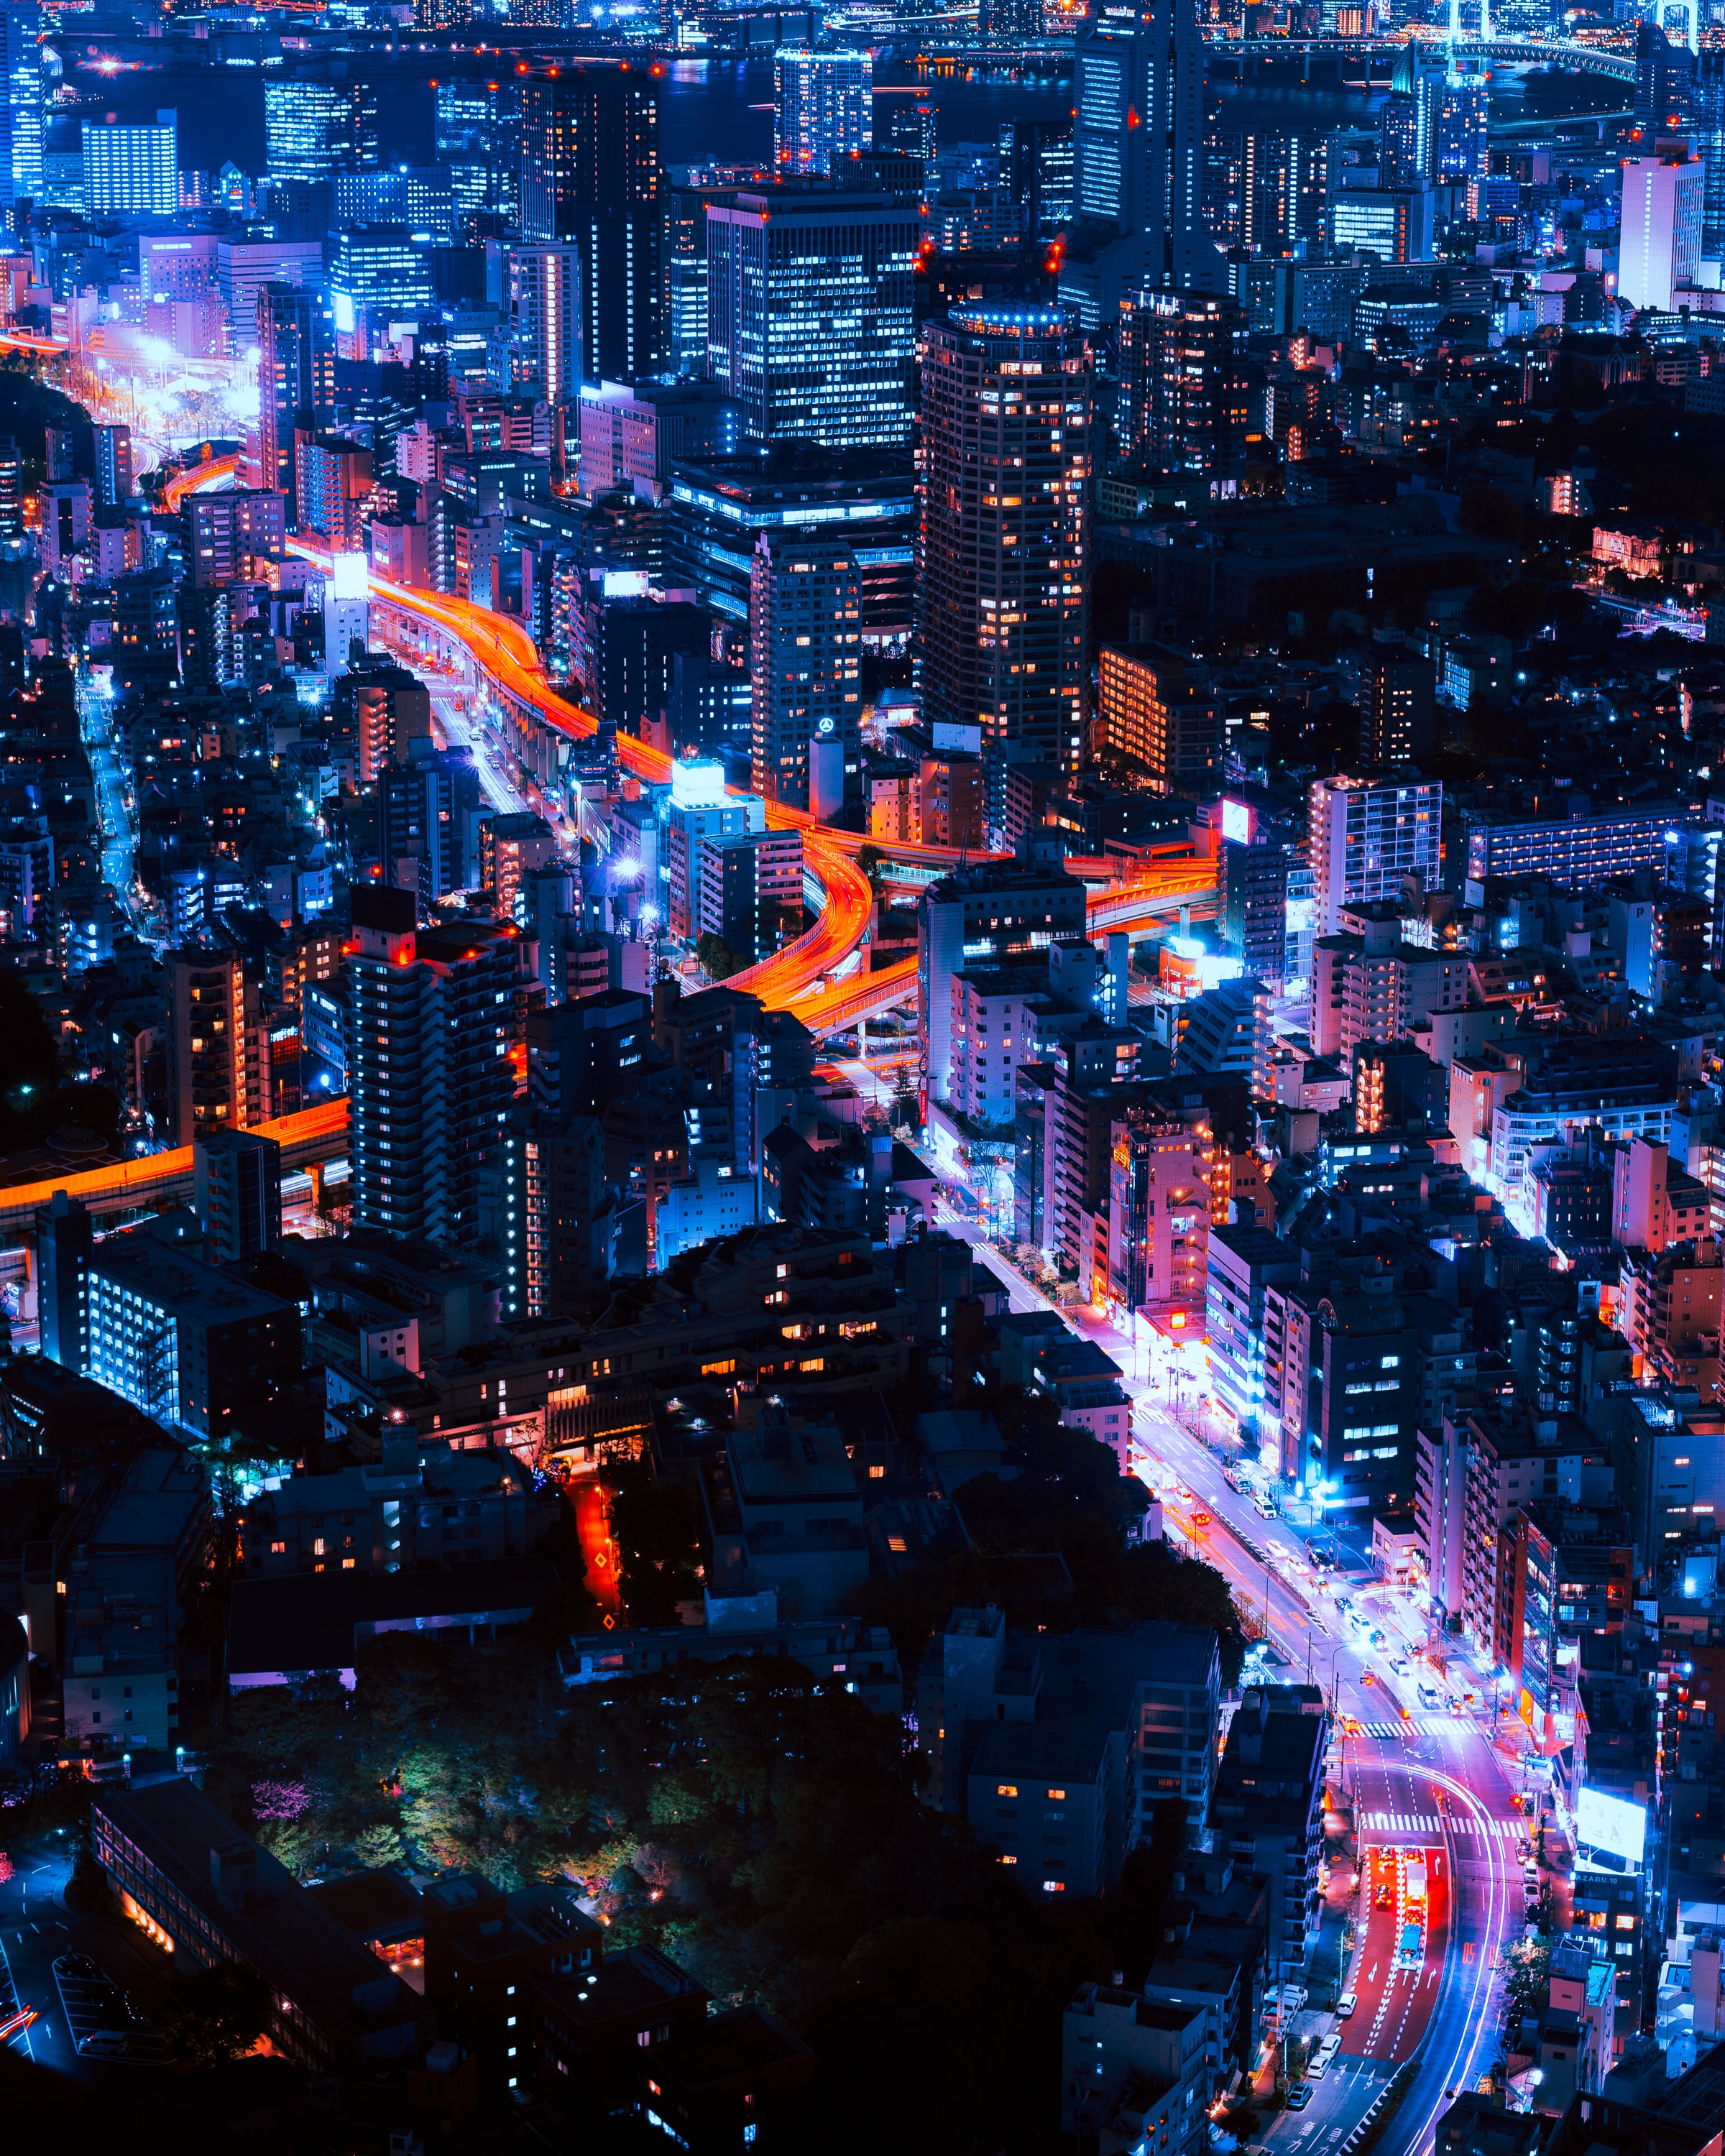 Long exposure image of city traffic at night.